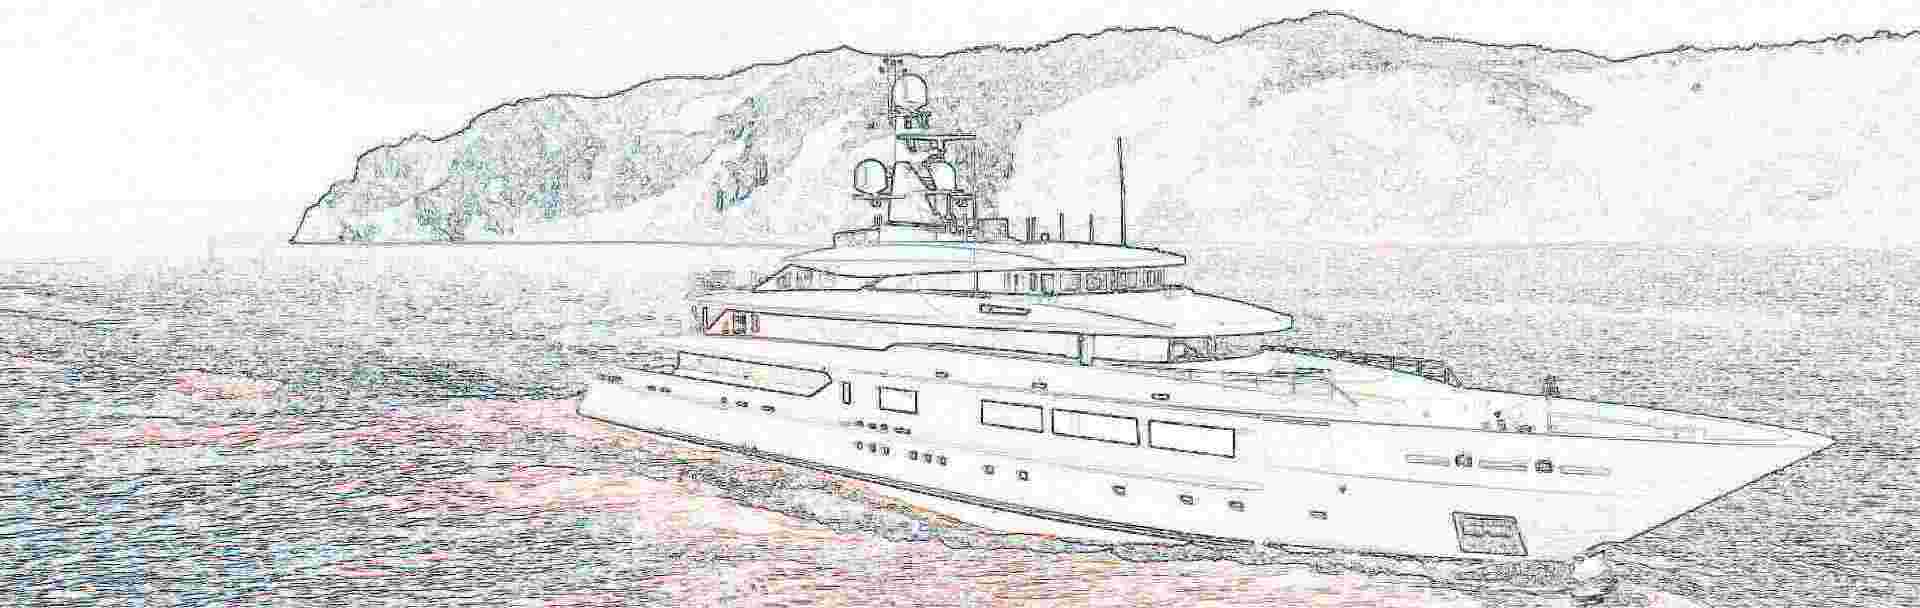 Canella Yachts Broker